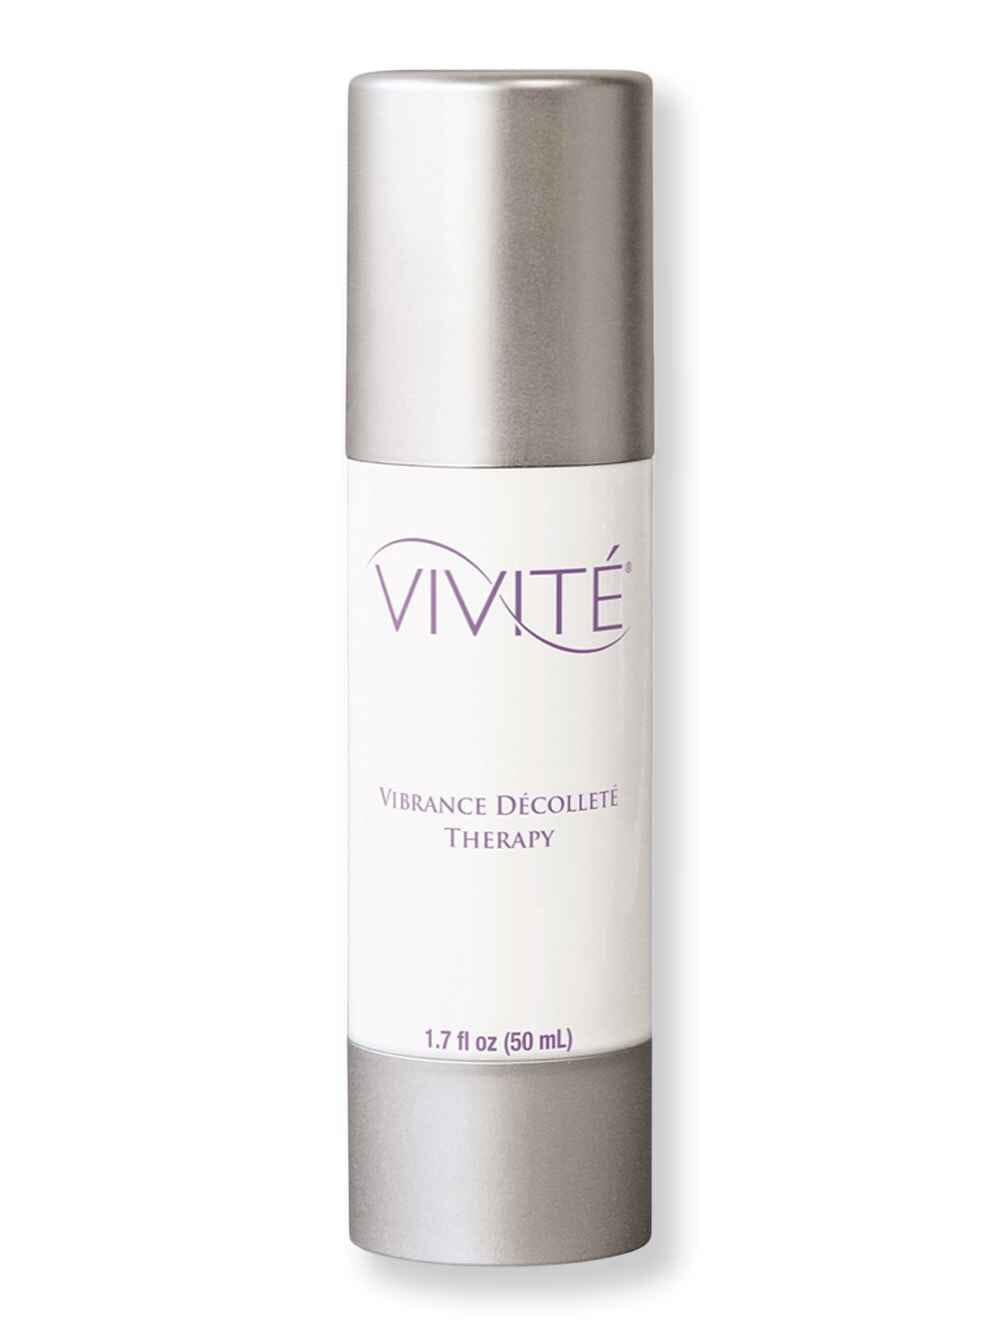 Vivite Vivite Vibrance Decollete Therapy 1.7 oz Decollete & Neck Creams 